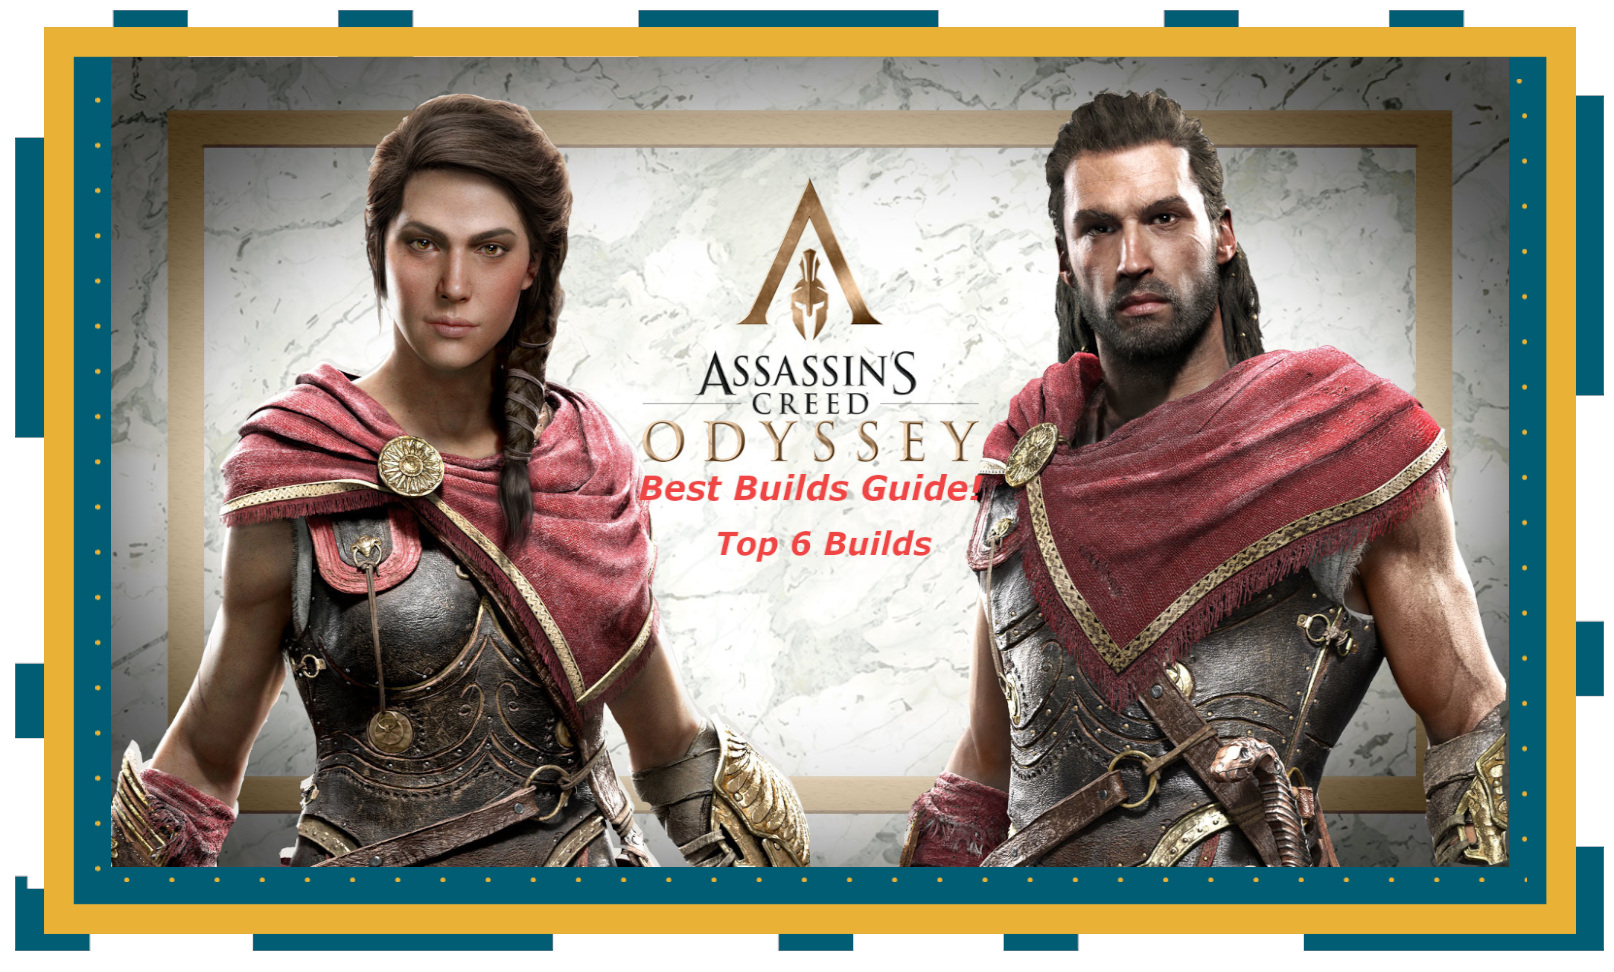 shilling barm presse Assassins Creed Odyssey Best Build Guide - Top 6 Builds - eXputer.com